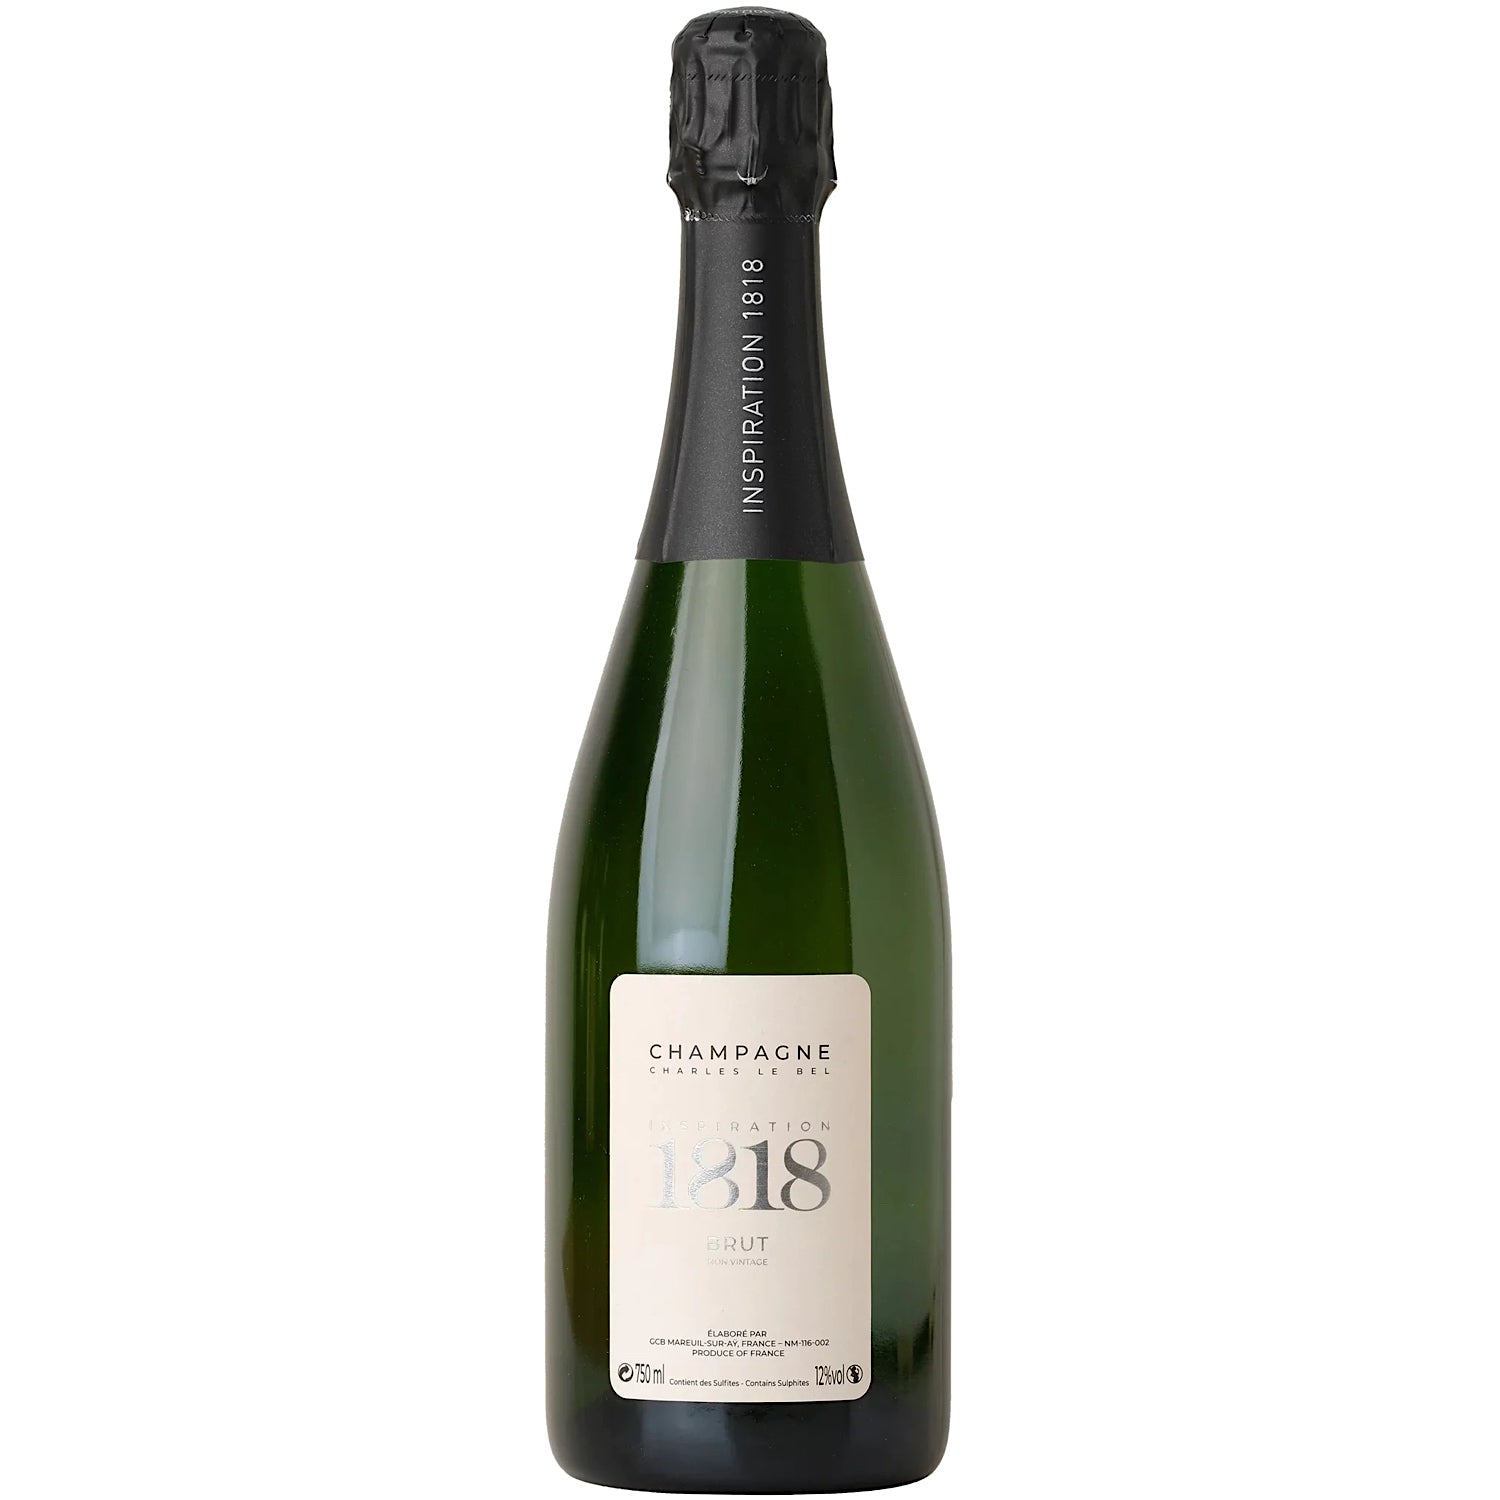 Champagne Billecart Salmon Inspiration 1818 Brut [750ml]